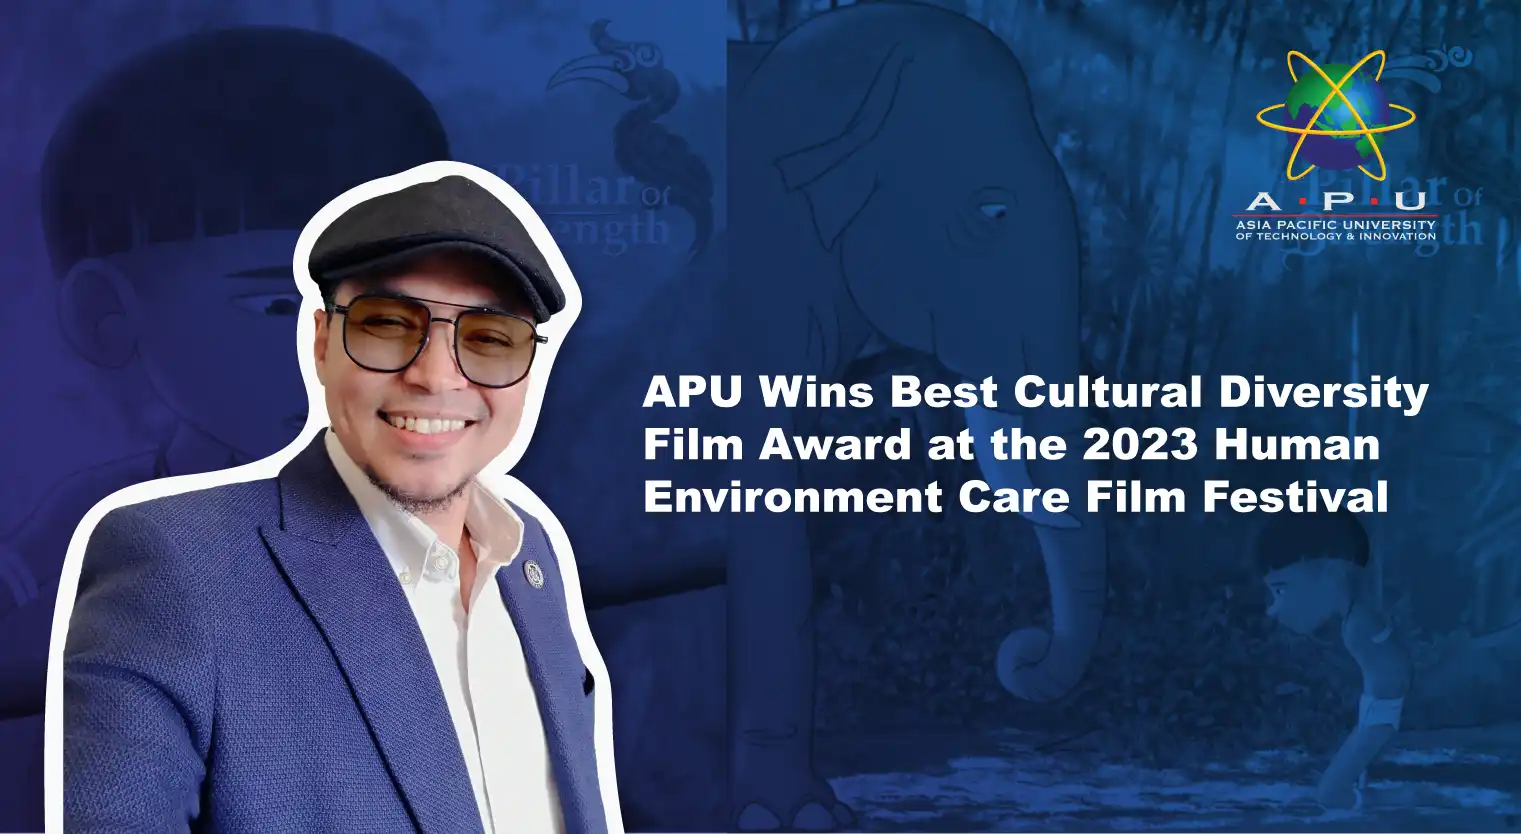 apu-wins-best-cultural-diversity-film-award-2023-human-environment-care-film-festival